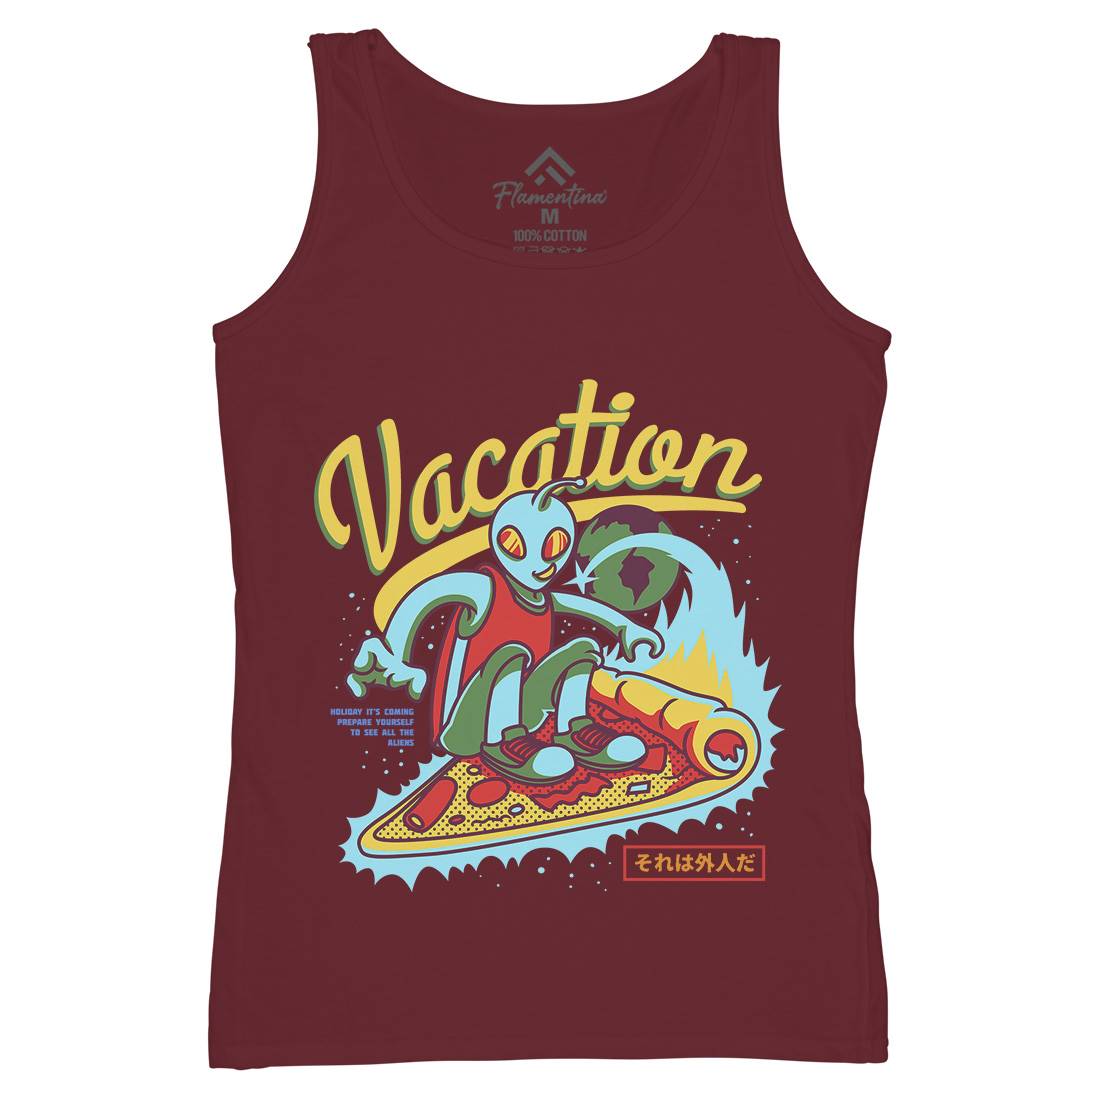 Vacation Mode Womens Organic Tank Top Vest Surf D871